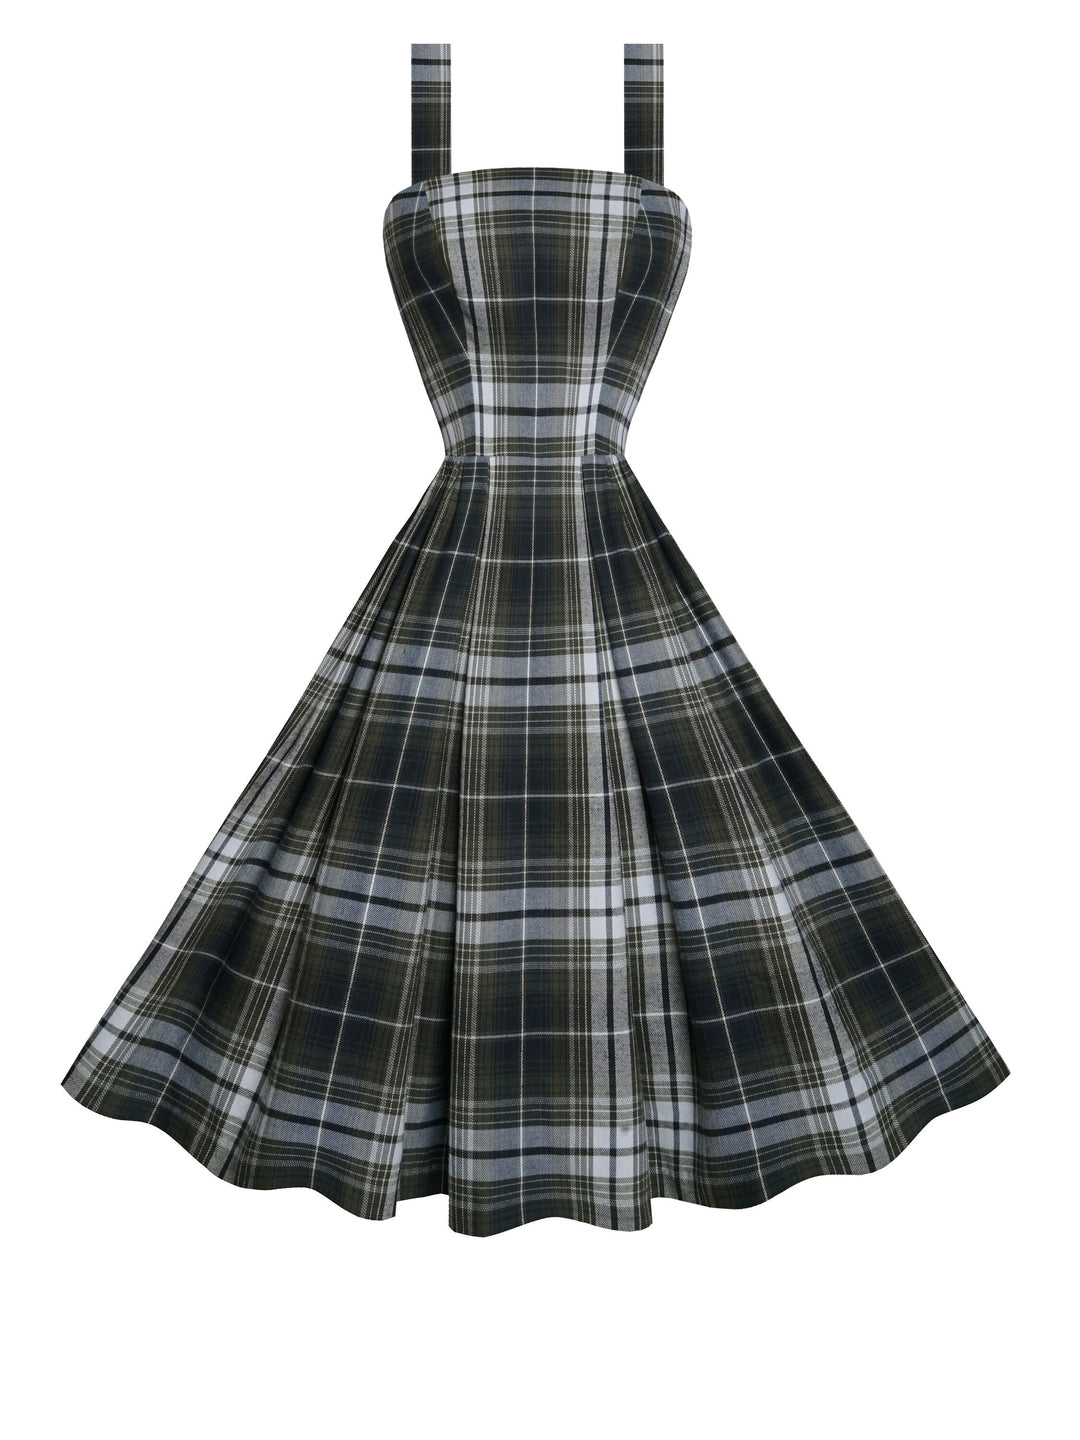 MTO - Lana Dress "Yorkshire Plaid"